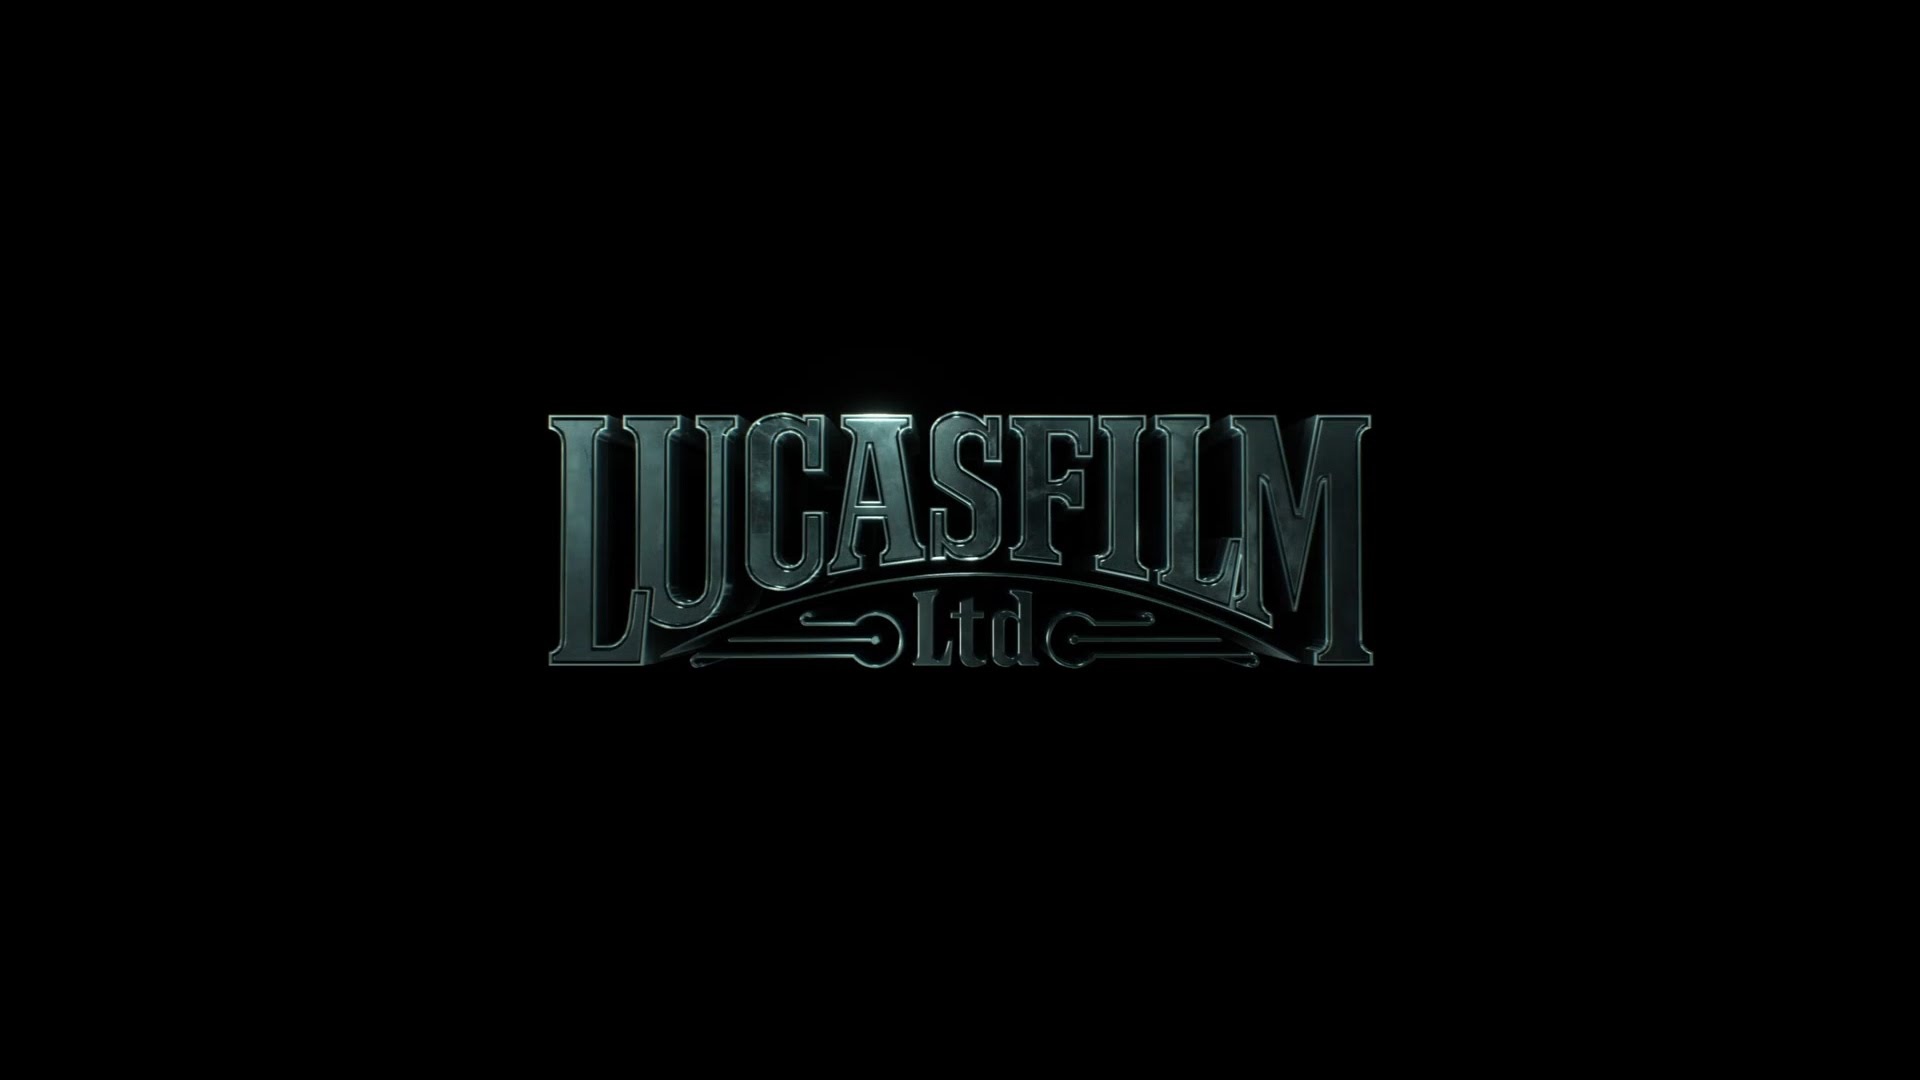 Best 53 Lucasfilm wallpaper, Hipwallpaper, Desktop, Mobile, 1920x1080 Full HD Desktop